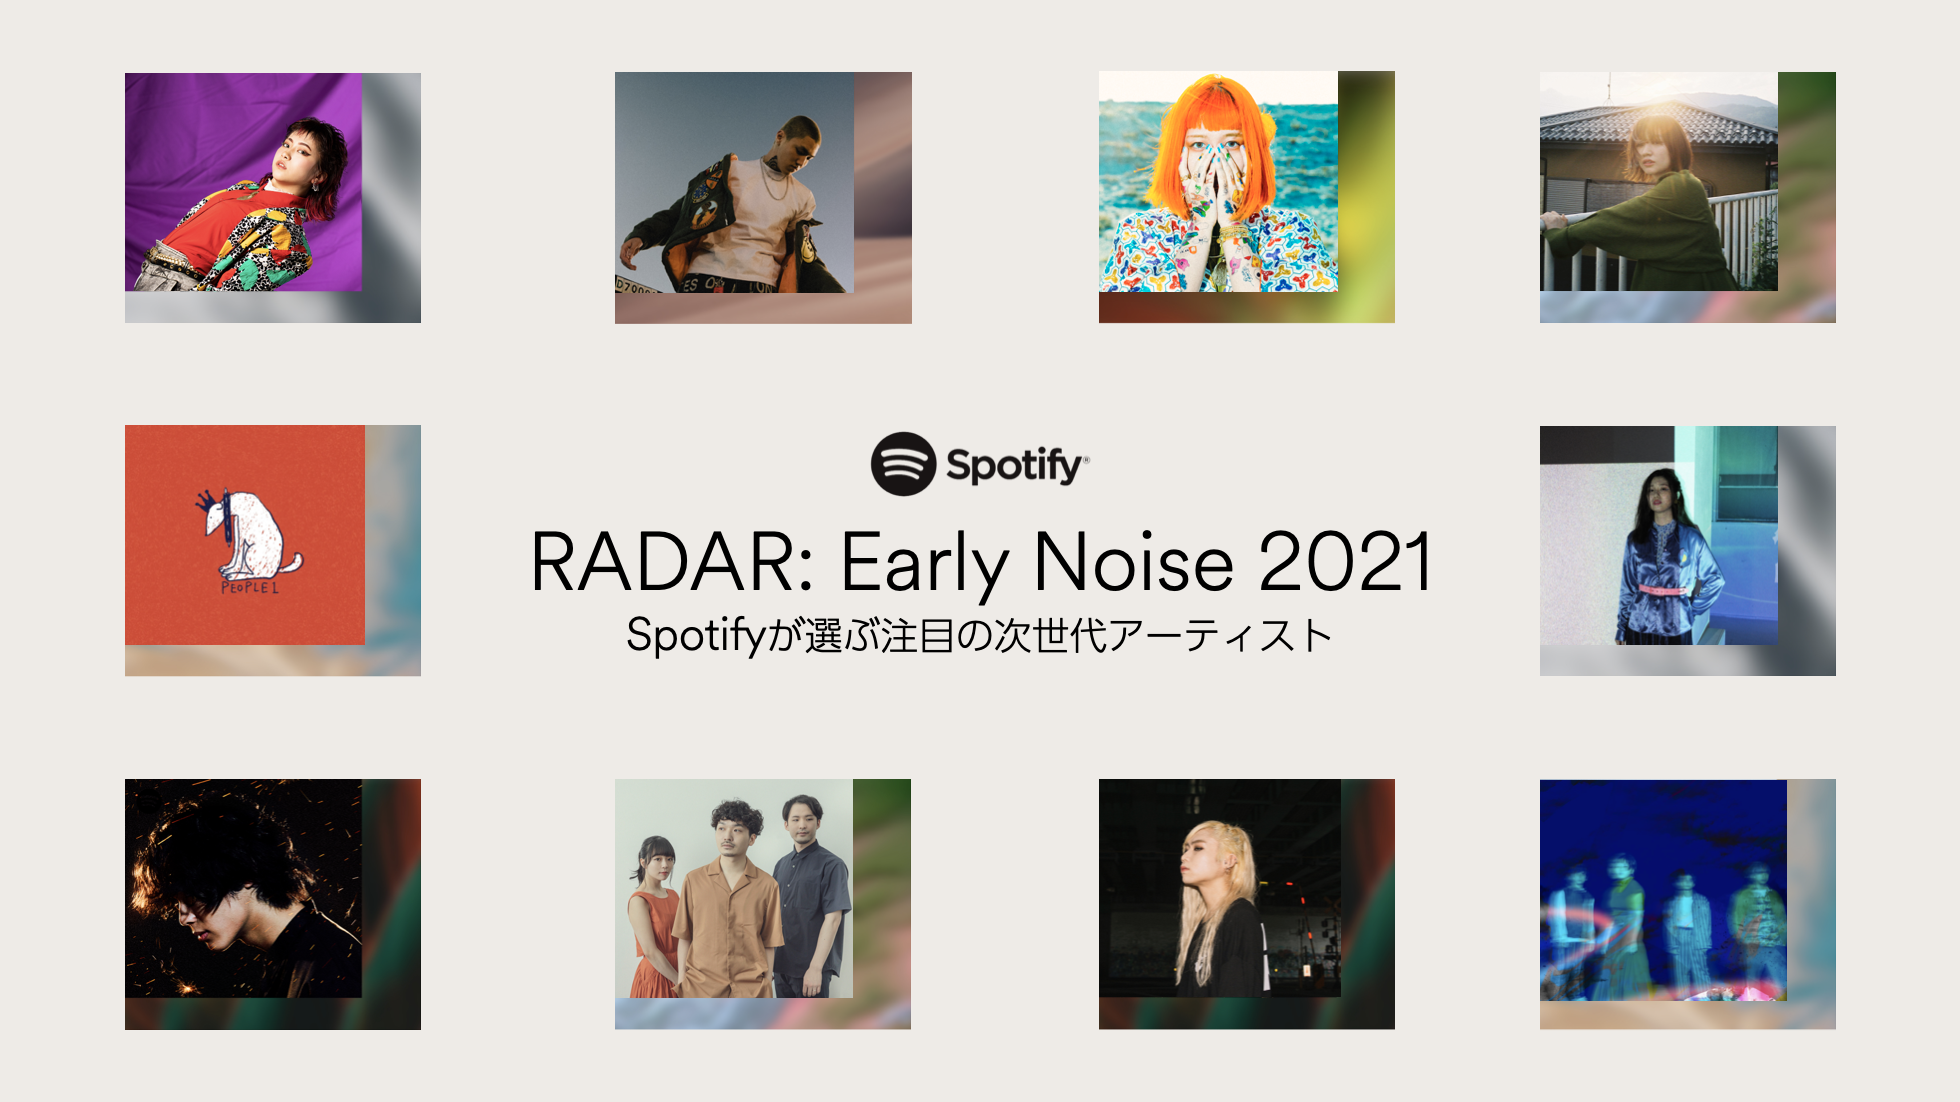 Spotifyが21年に躍進を期待する次世代アーティスト Radar Early Noise 21 を発表 スポティファイジャパン株式会社のプレスリリース